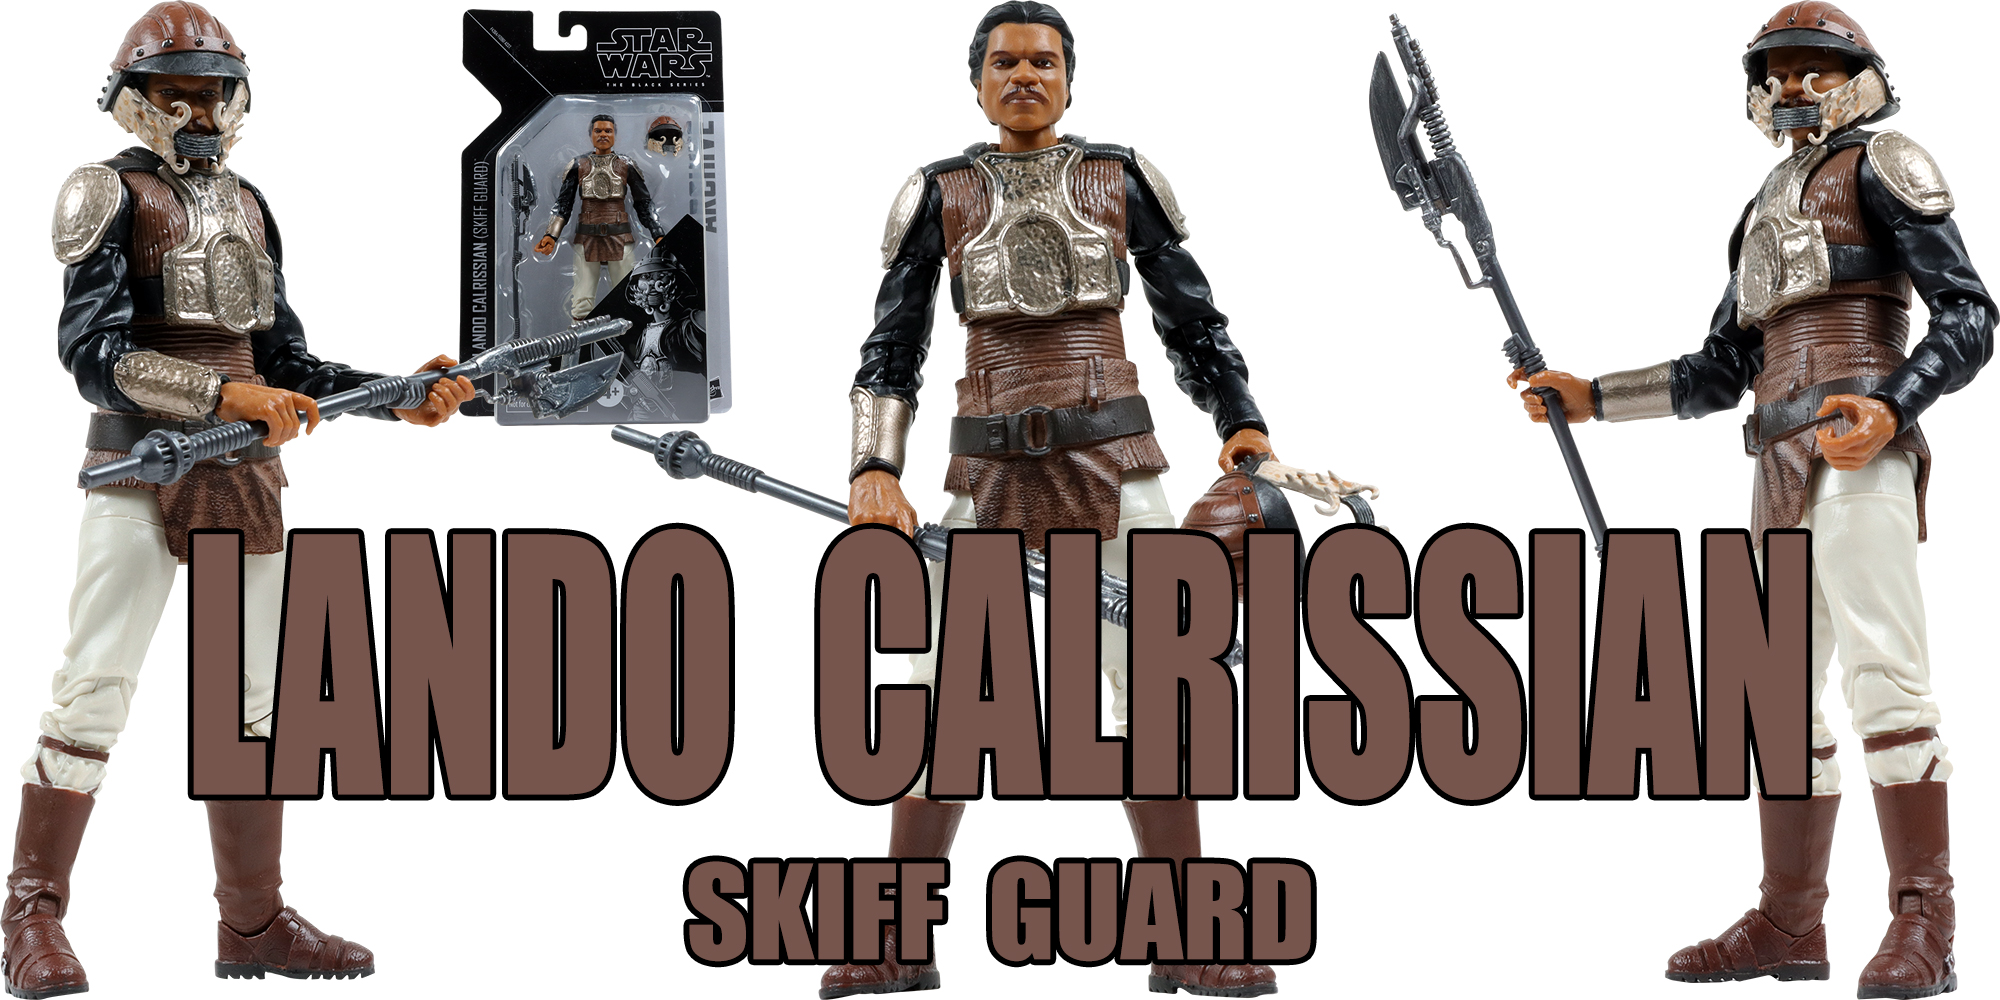 Black Series Lando Calrissian Skiff Guard